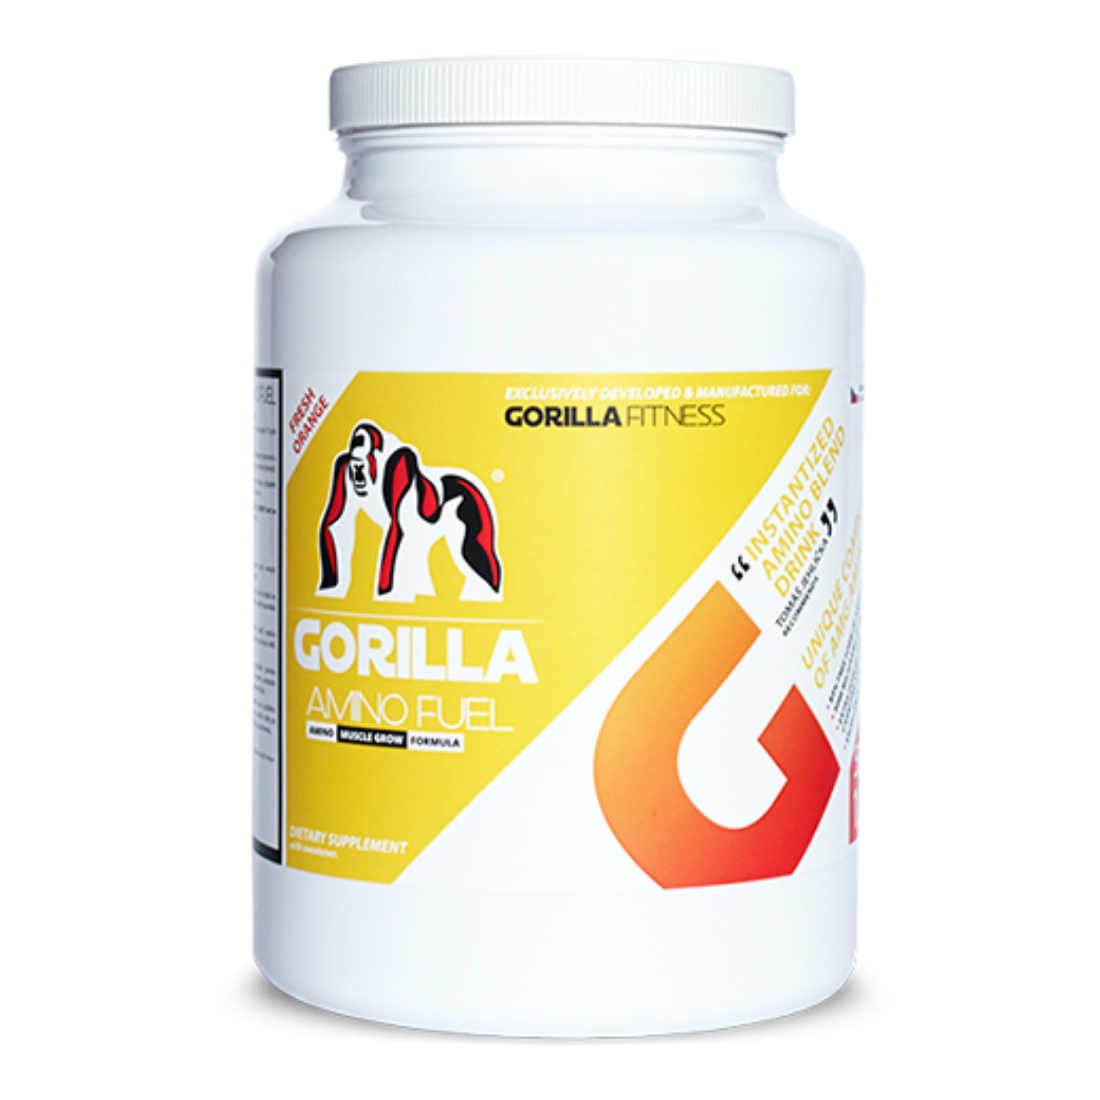 GORILLA AMINO Fuel 550 g - aminokyseliny